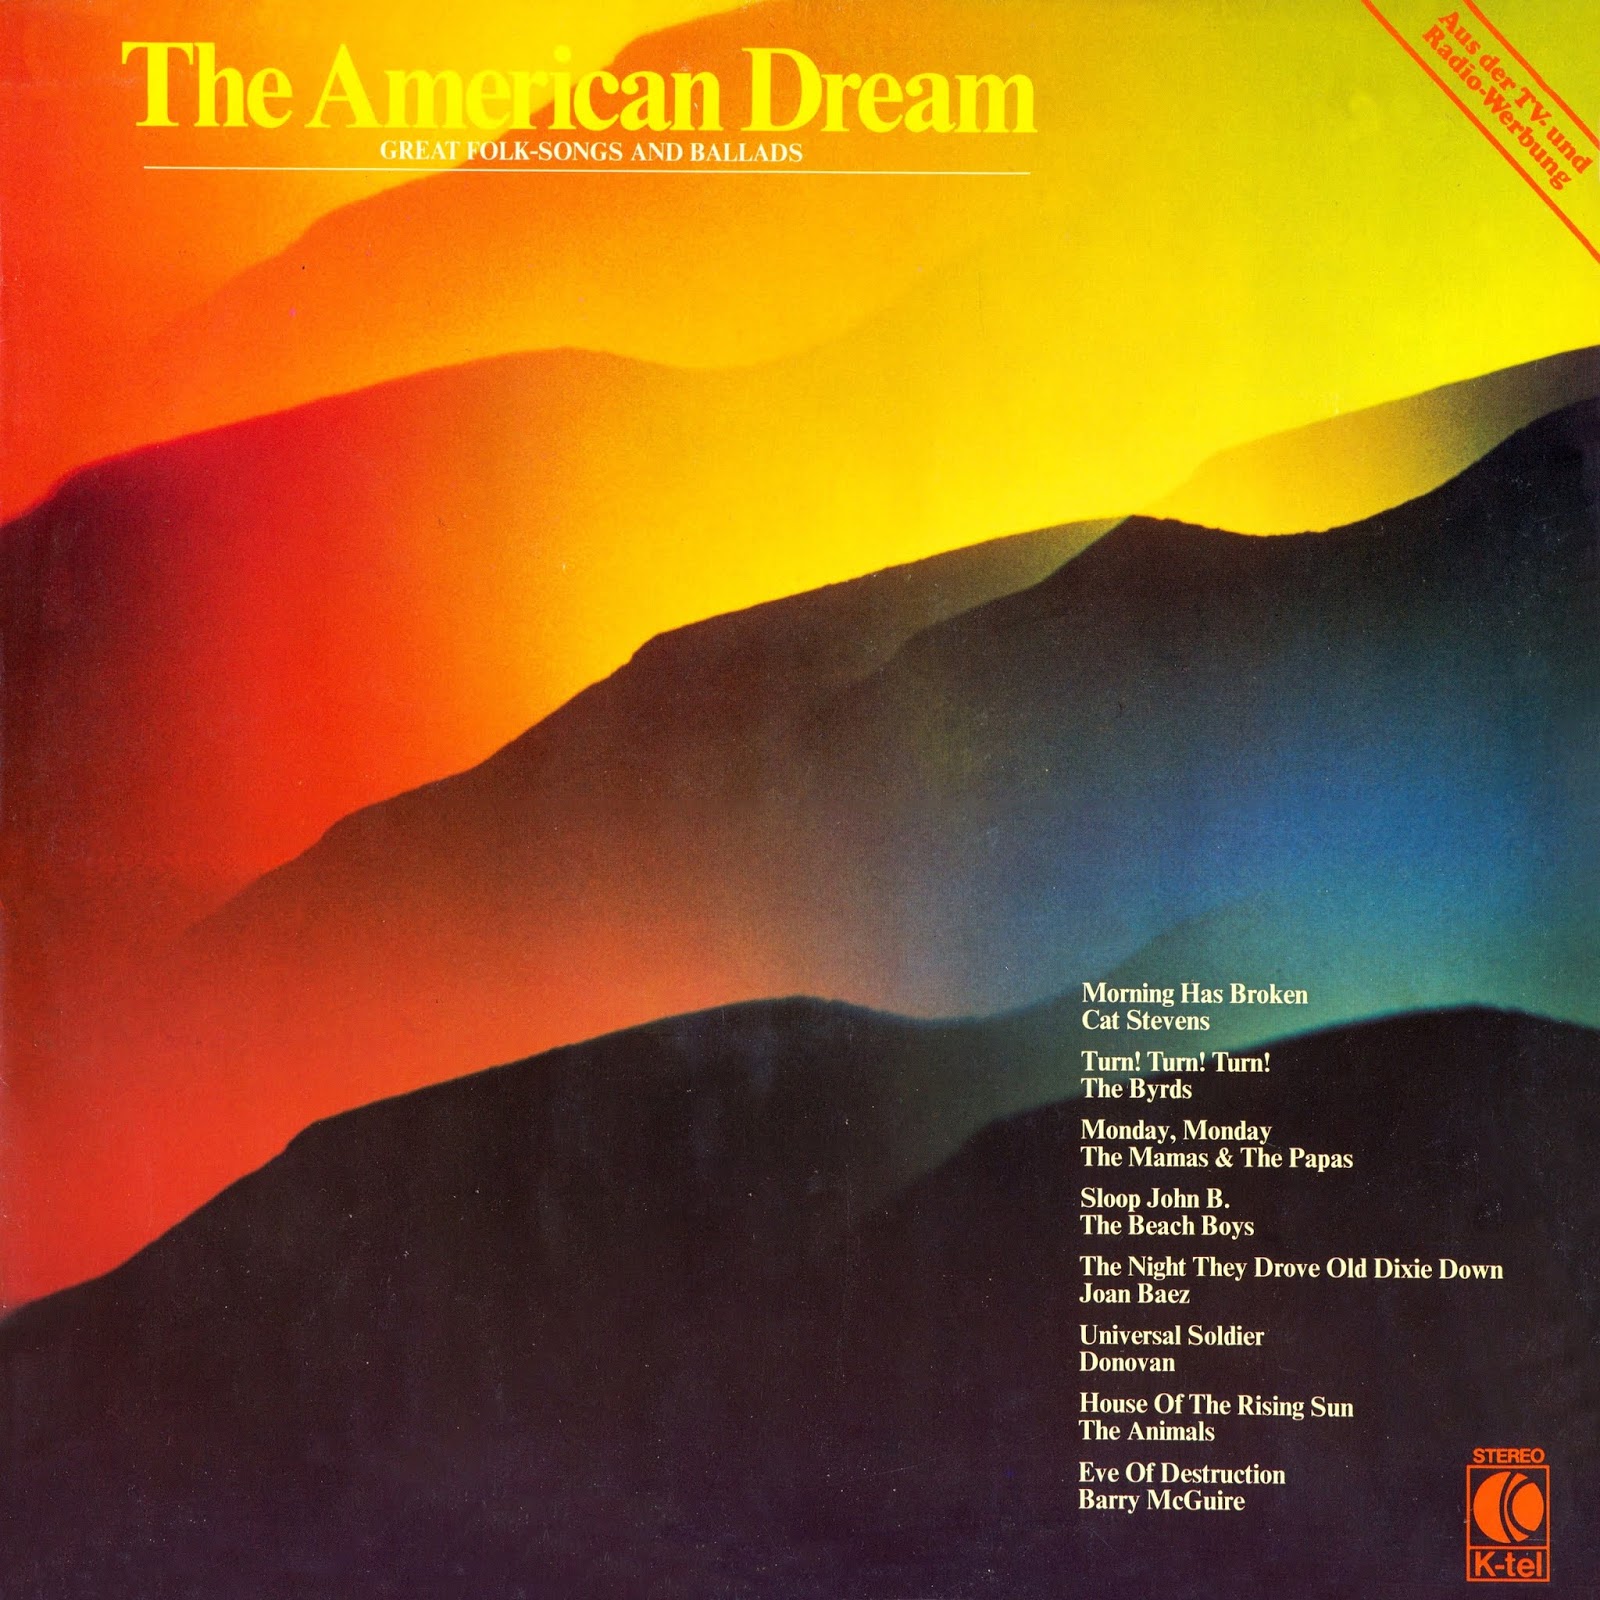 Folk Songs and Ballads. The mamas and the Papas House of the Rising Sun альбом. American Dream песня. Американская мечта песня. Dream greatest